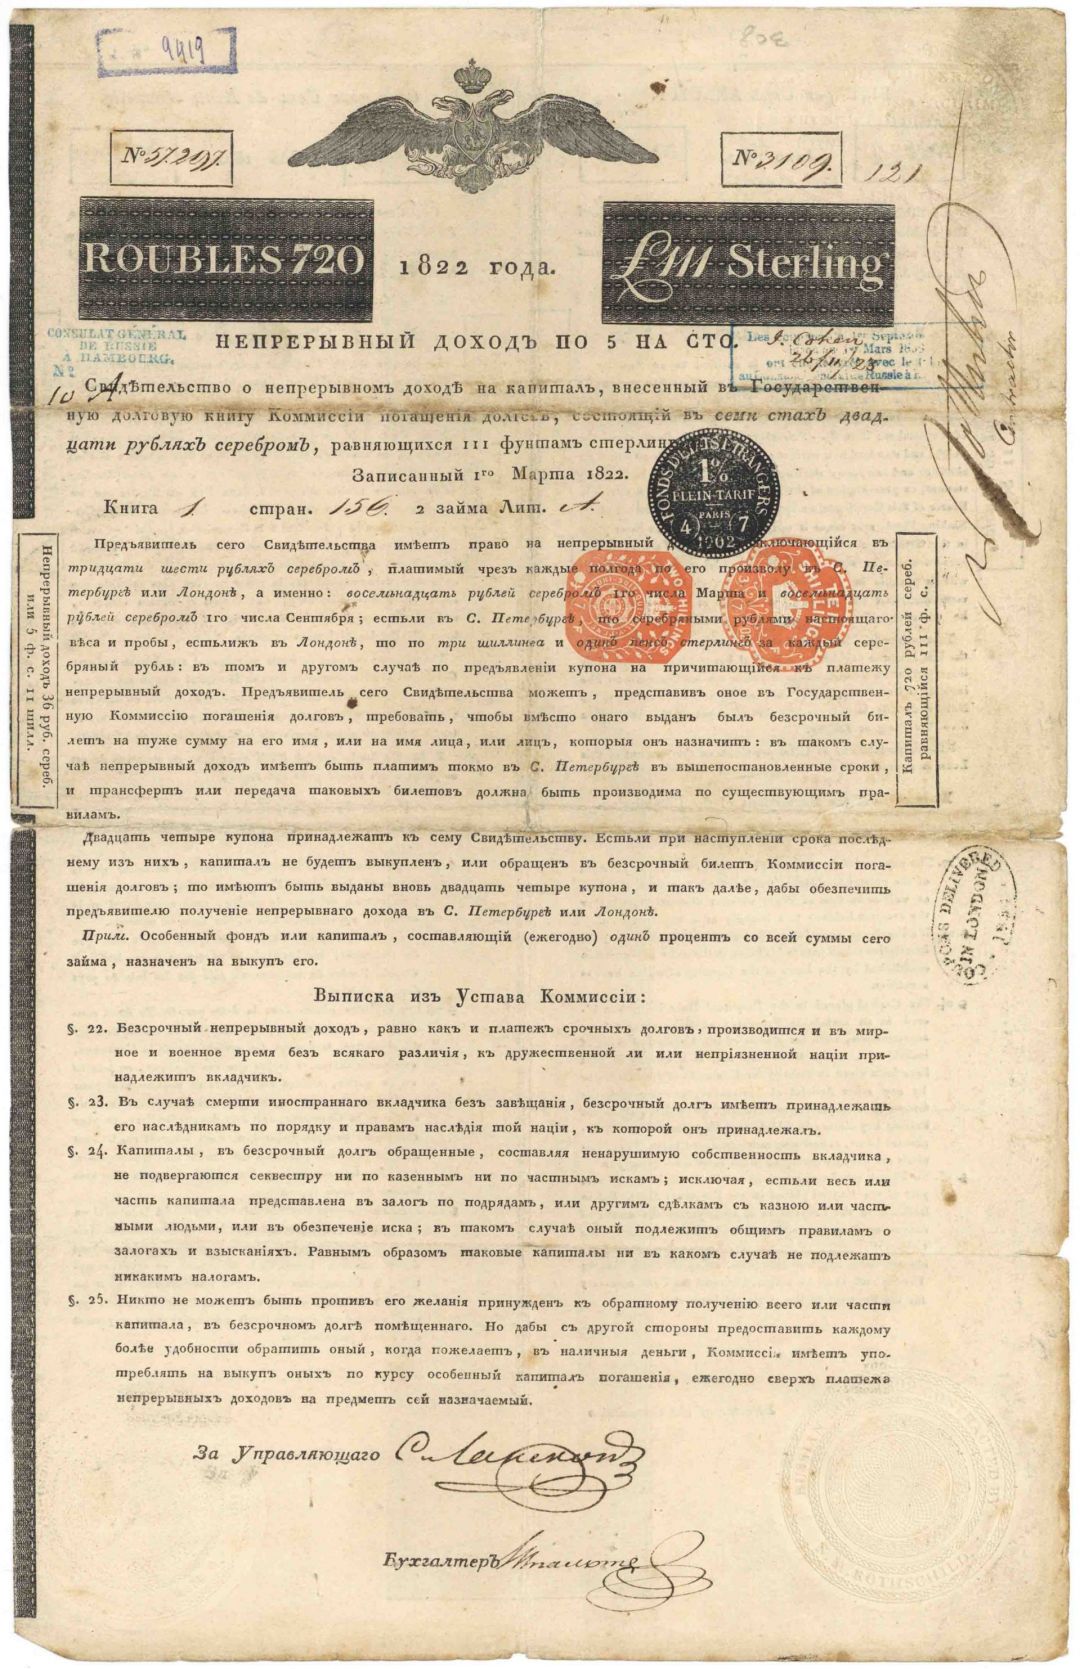 1822 Russian Loan 5% Uncanceled 720 Roubles Bond signed by Nathan Mayer Freiherr von Rothschild - Autograph Bond